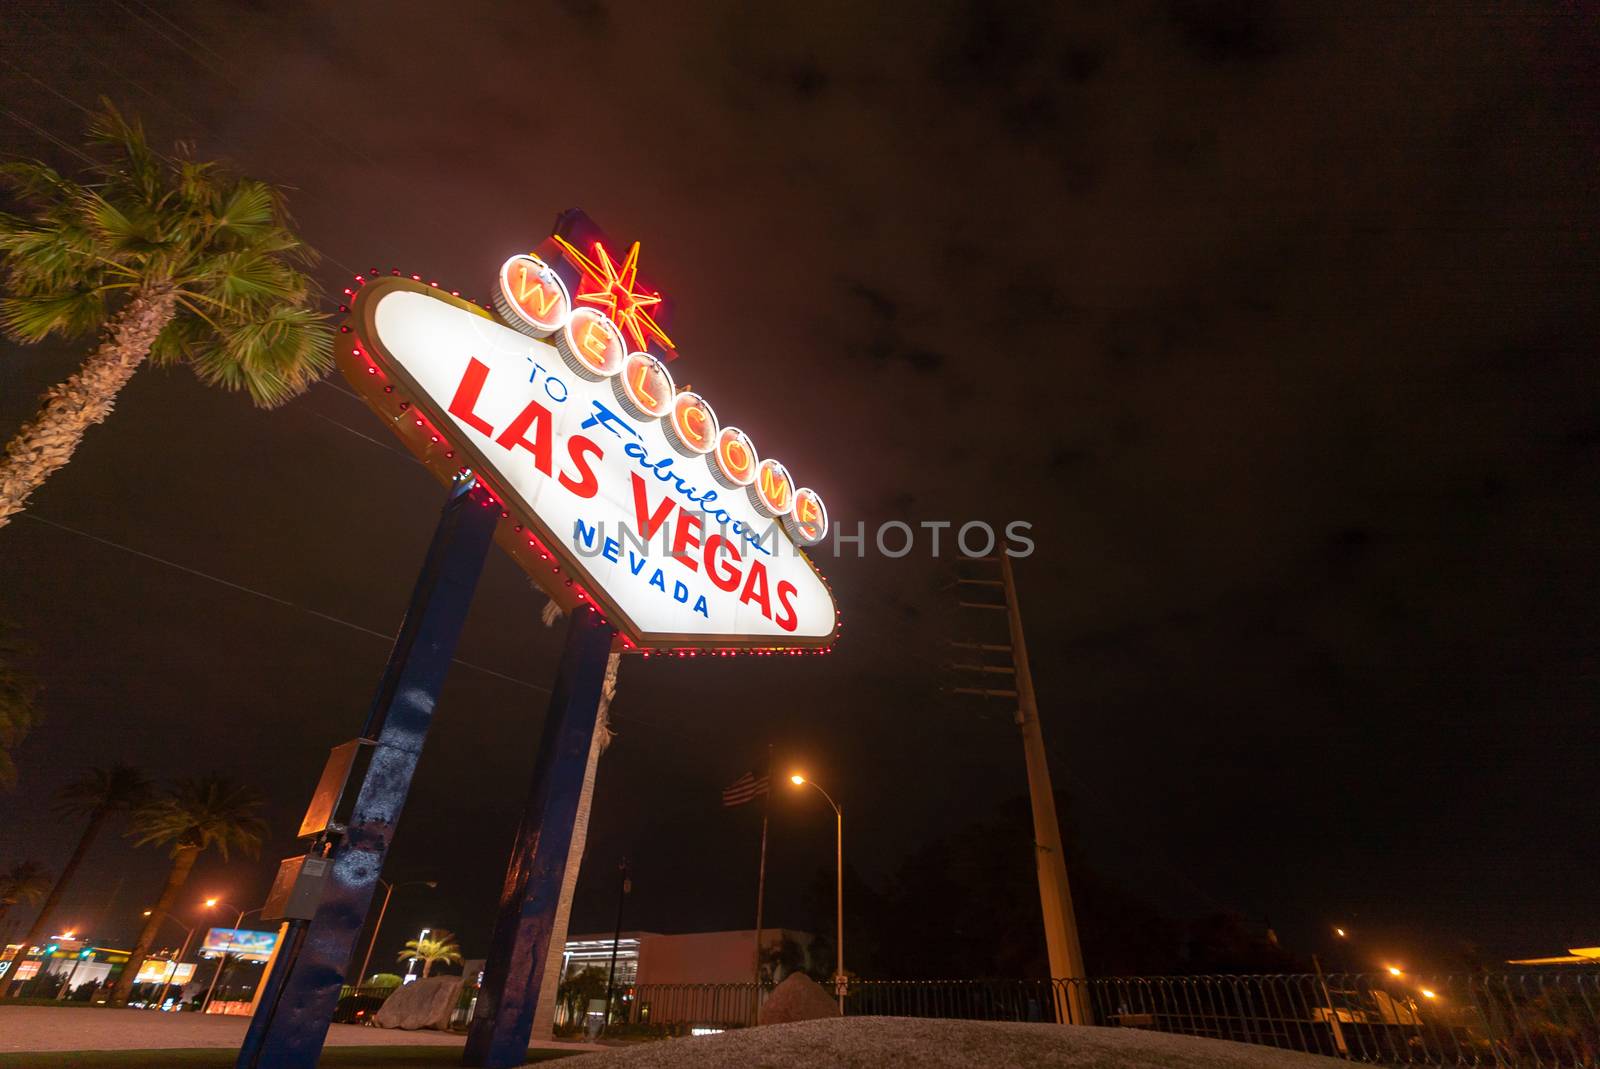 Famous Las Vegas sign at night in Las Vegas city, Nevada, USA